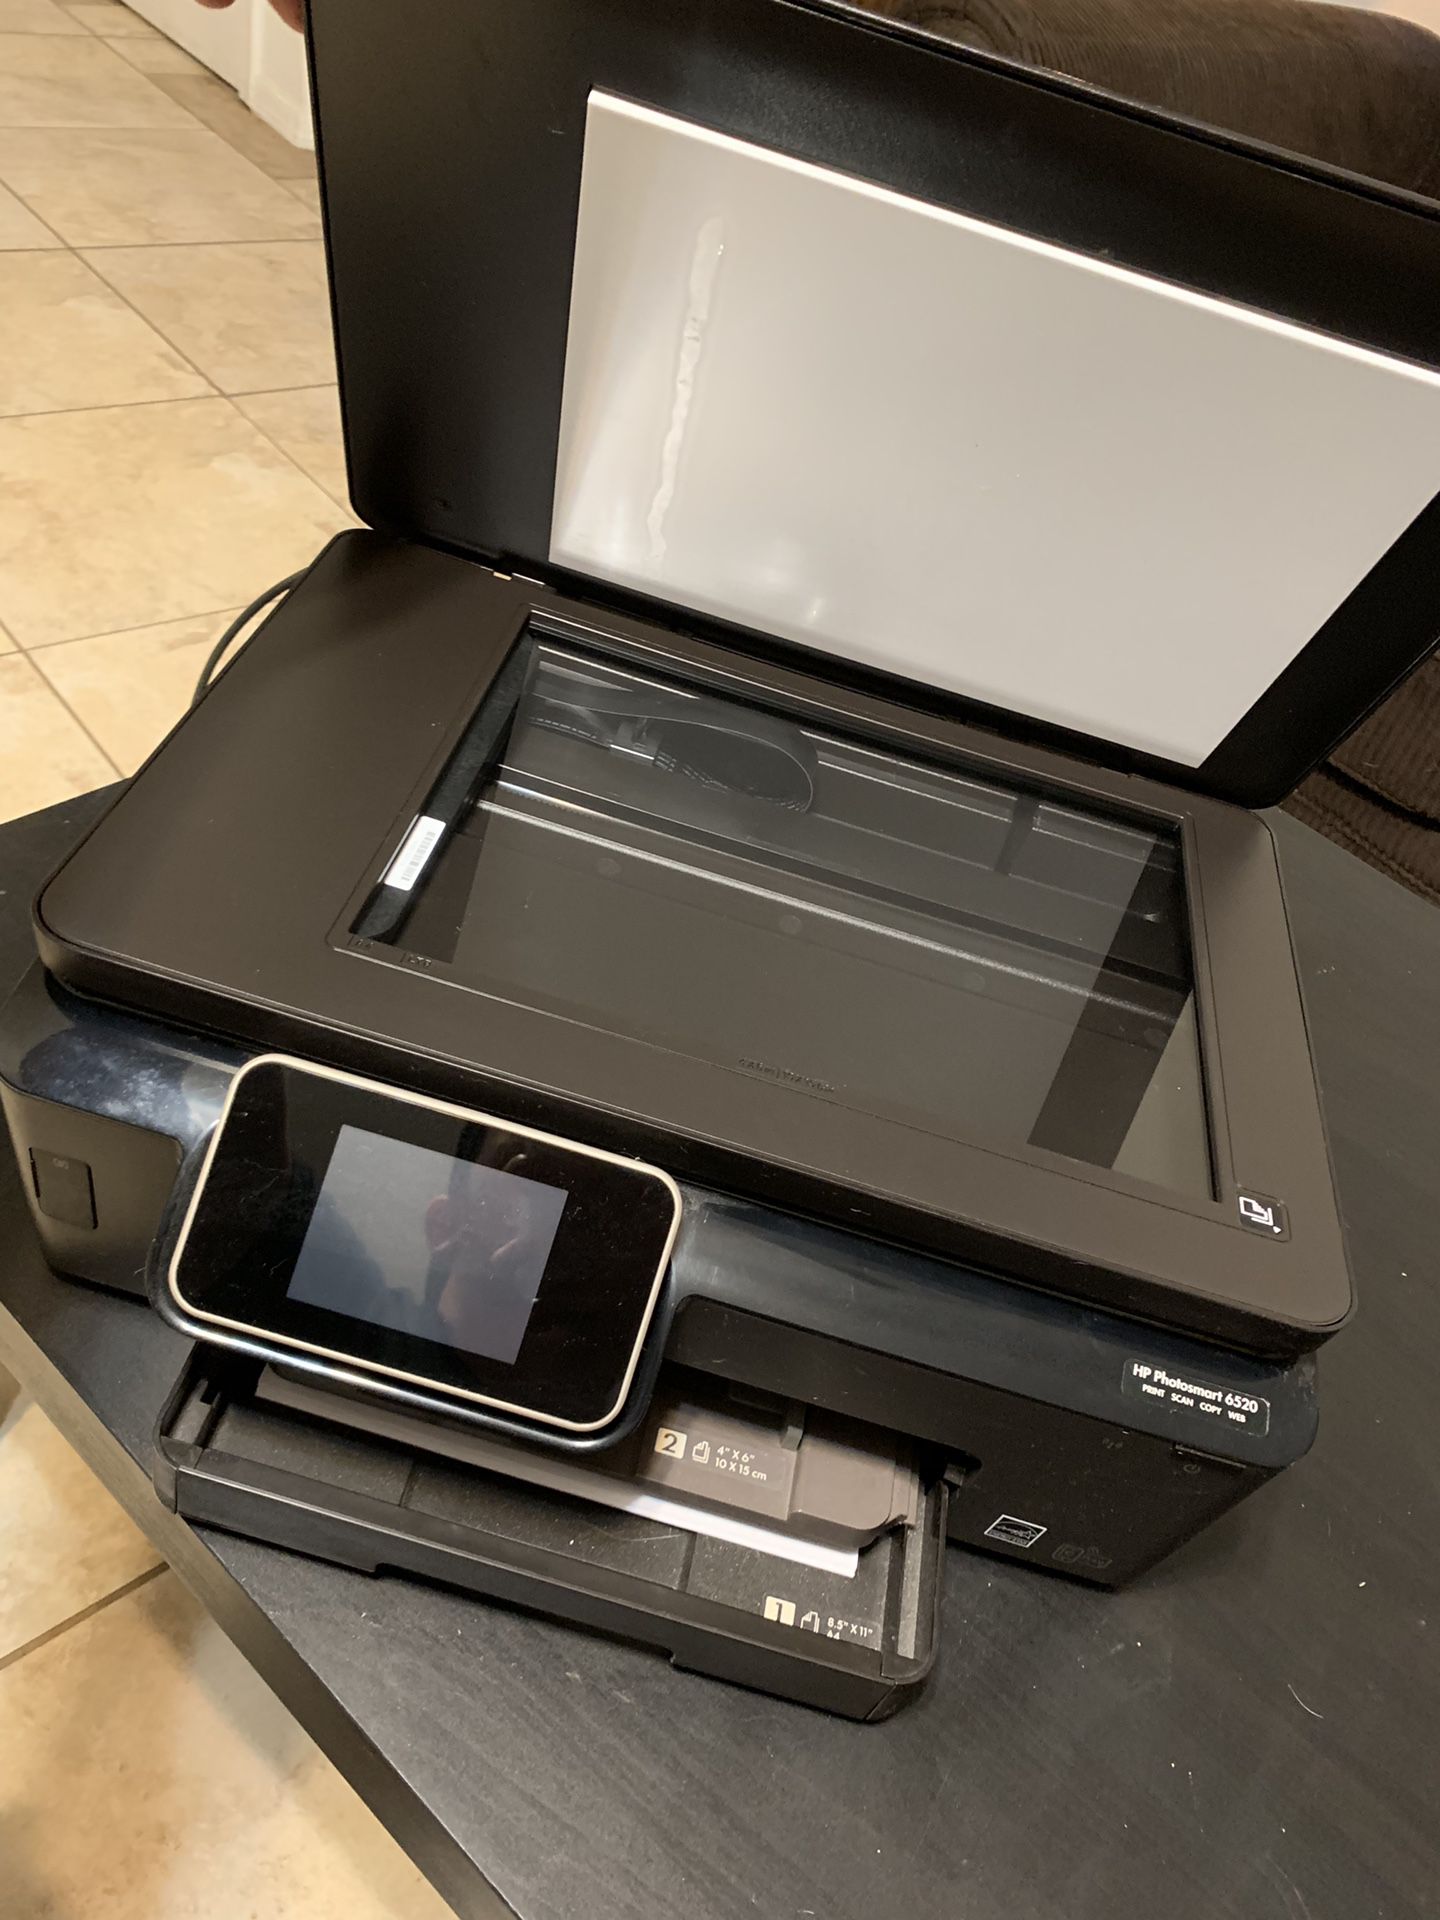 Brand new HP printer/ photo printer / scanner